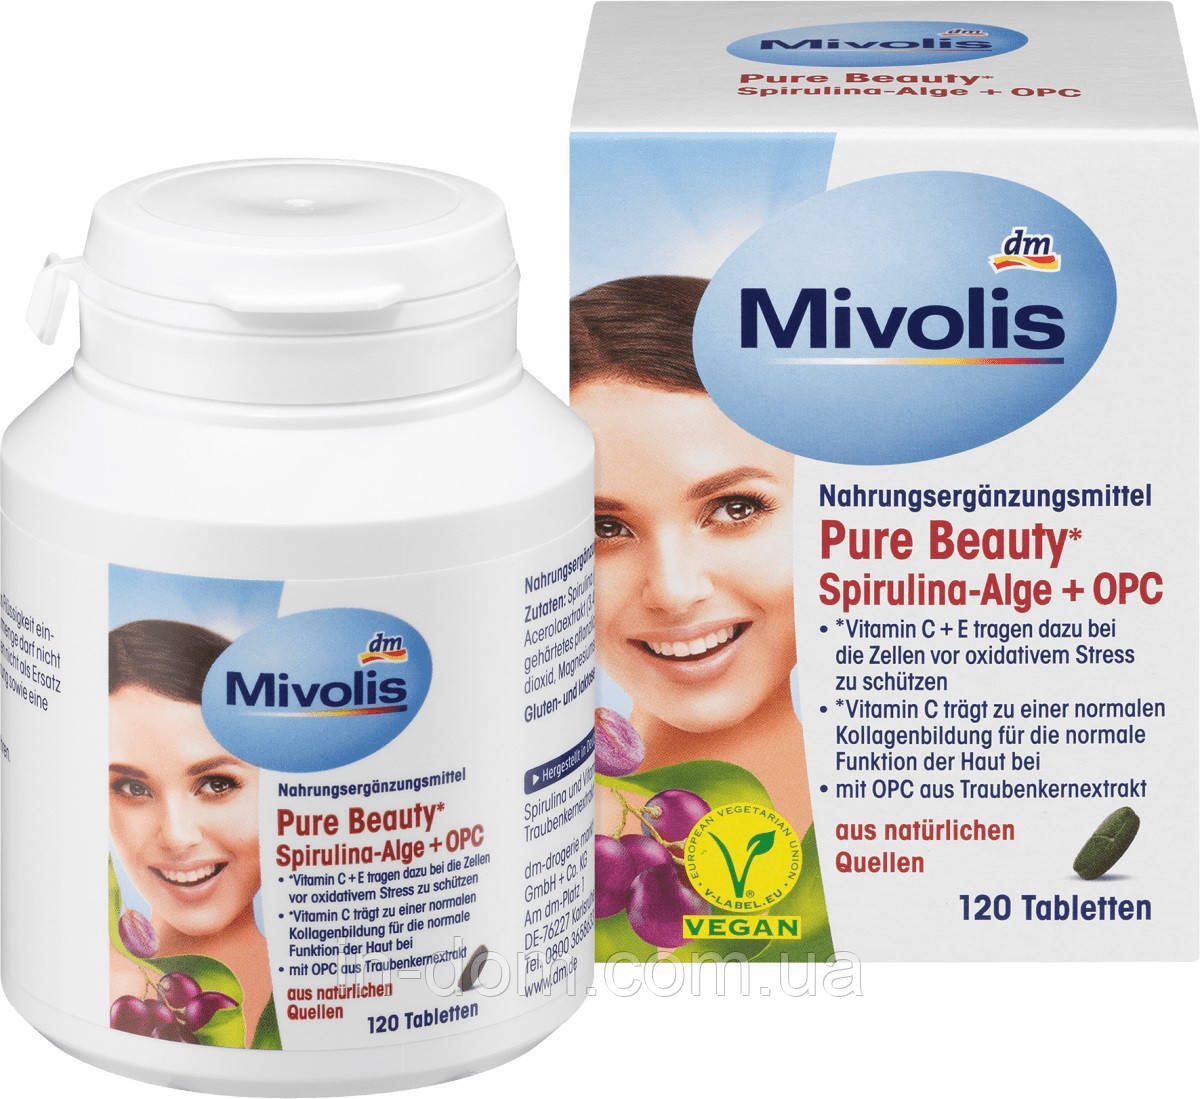 Mivolis Pure Beauty* Spirulina-Alge + OPC Таблетки для защиты клеток и нормальной функции кожи, 120 шт